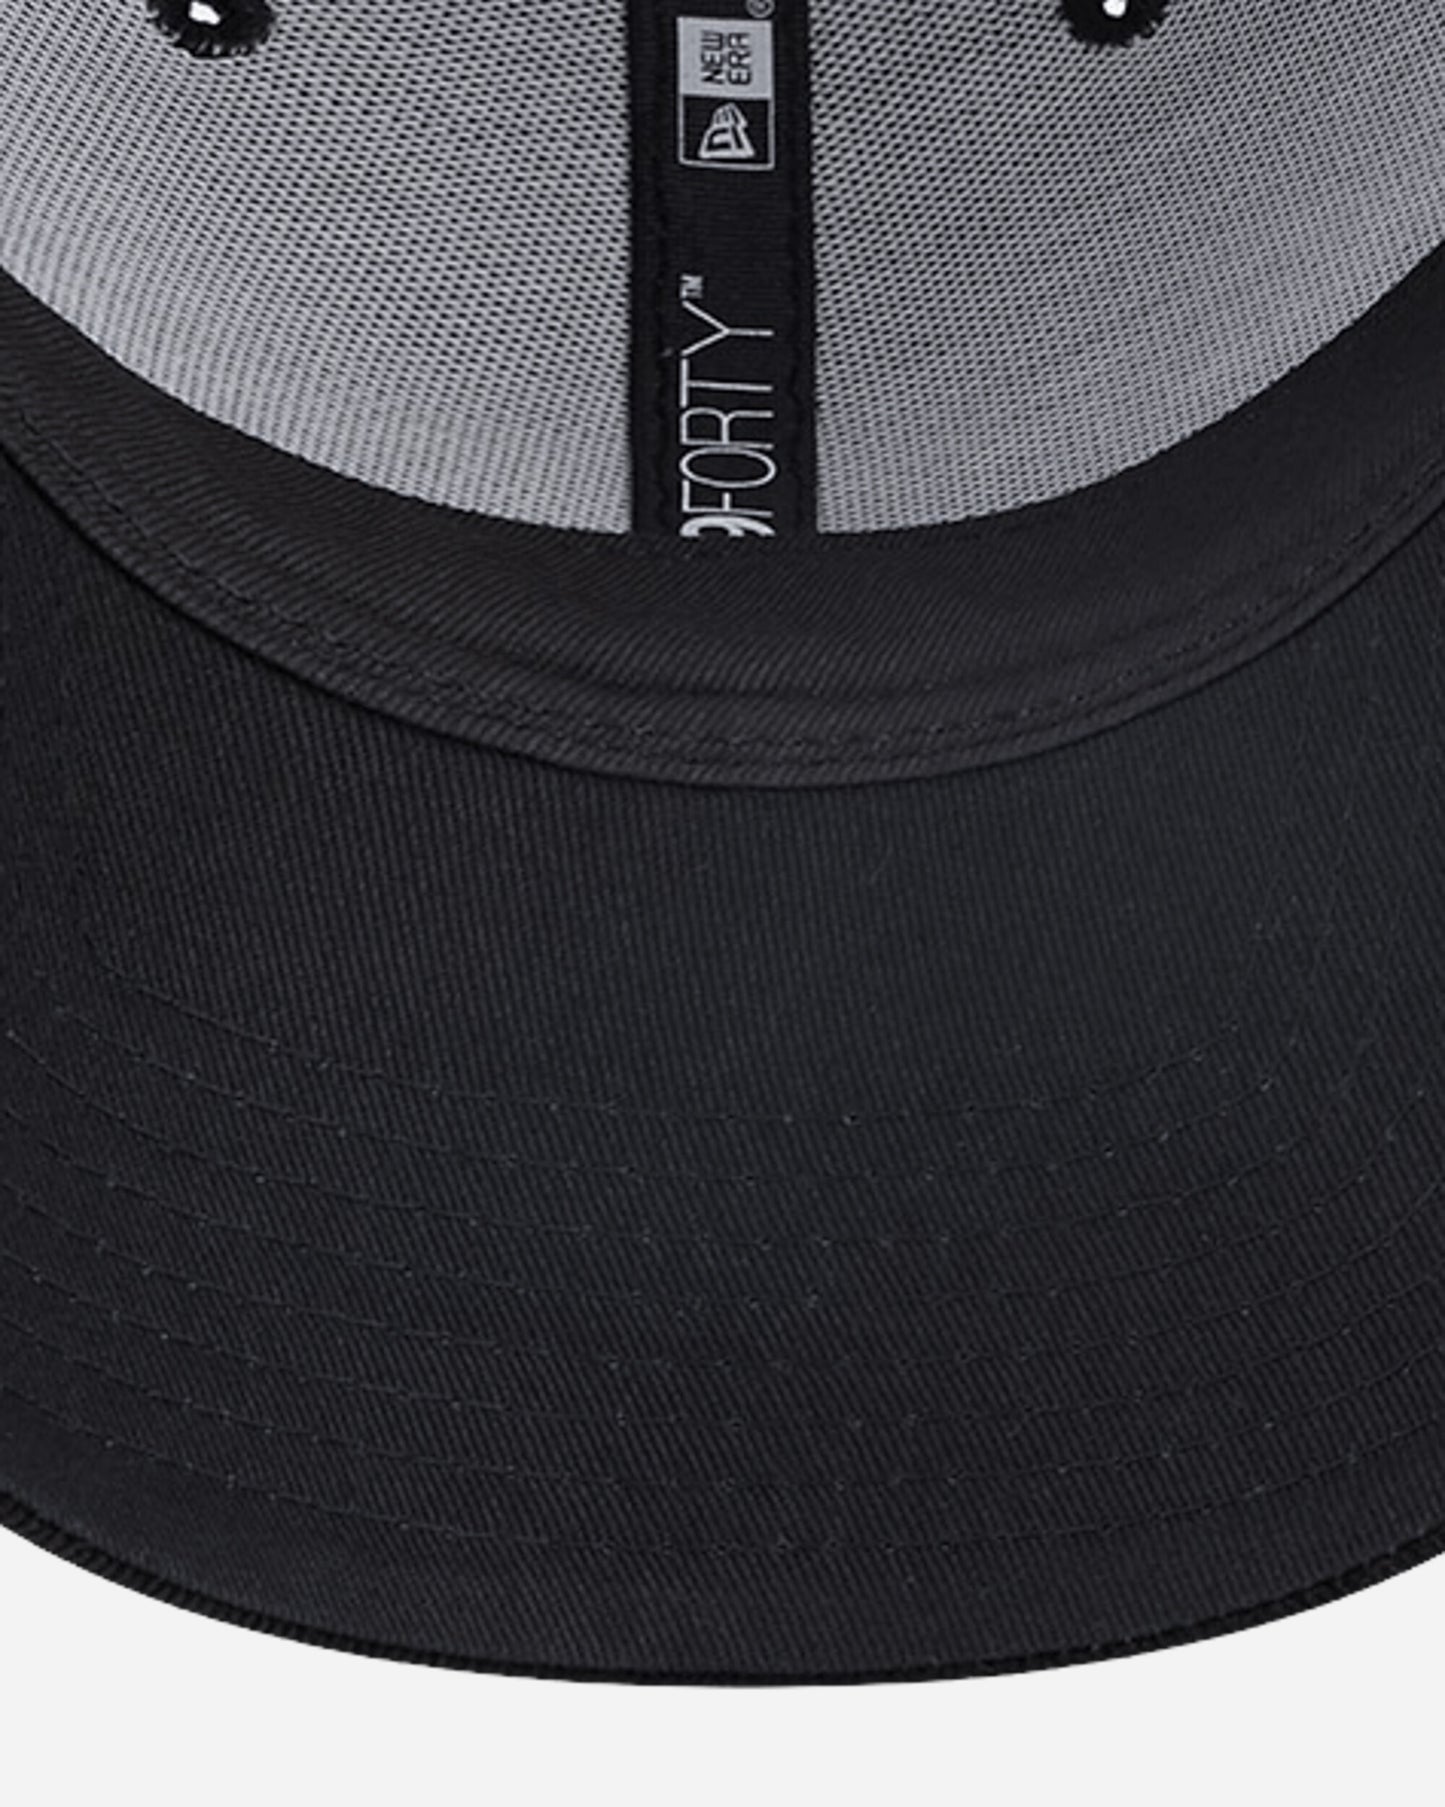 New Era x A.C. Milan Core 9Forty® X Ac Milan Black Hats Caps 60363 591